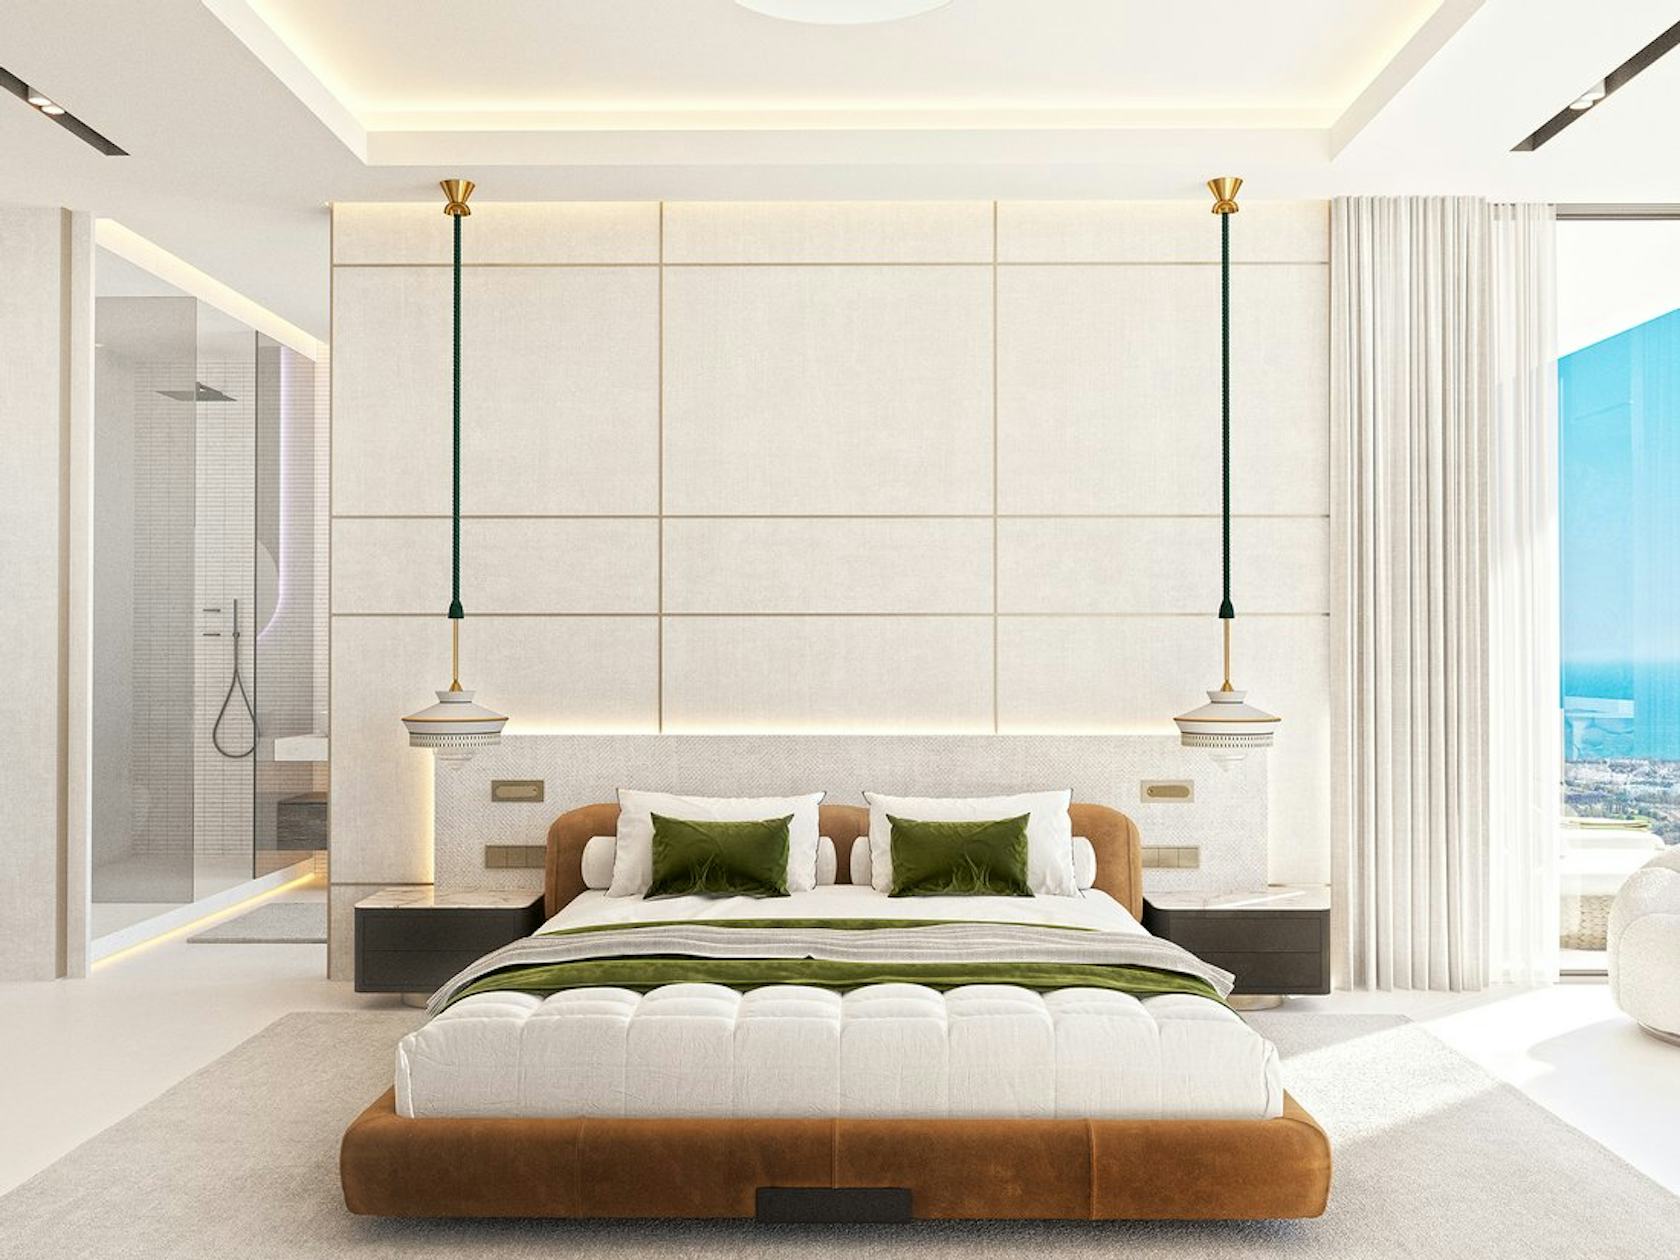 interior design indoors furniture bedroom bed room lamp home decor